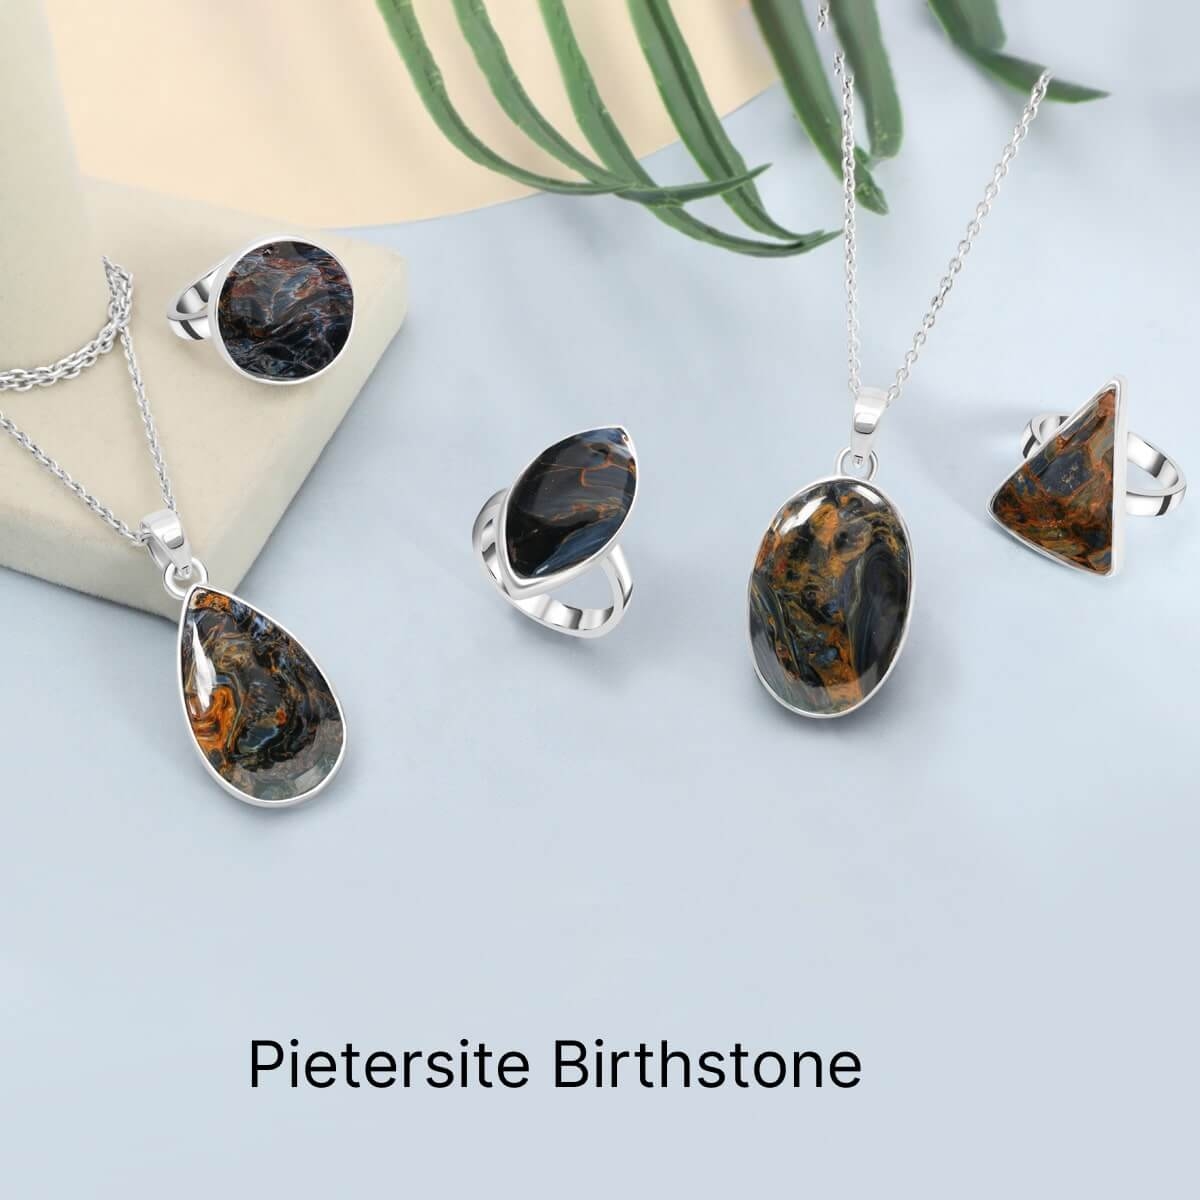 Pietersite as a birthstone